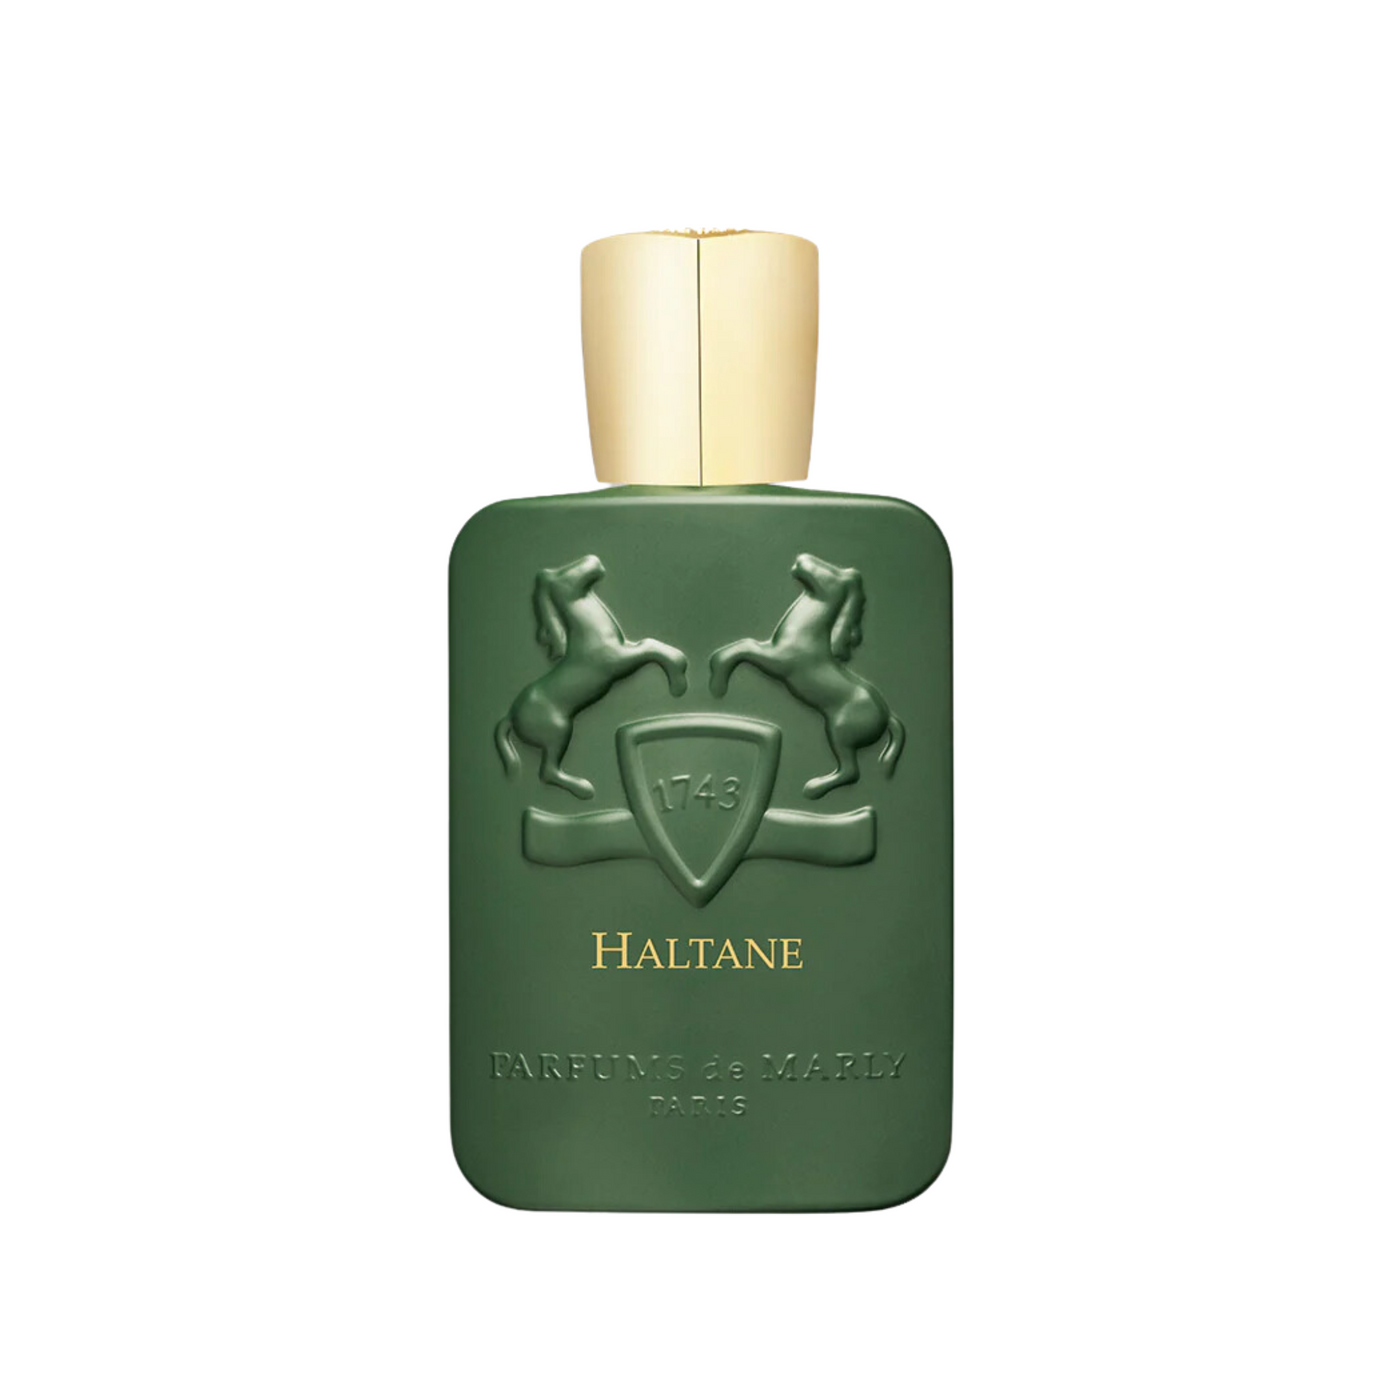 Haltane Parfums de Marly 125 ml